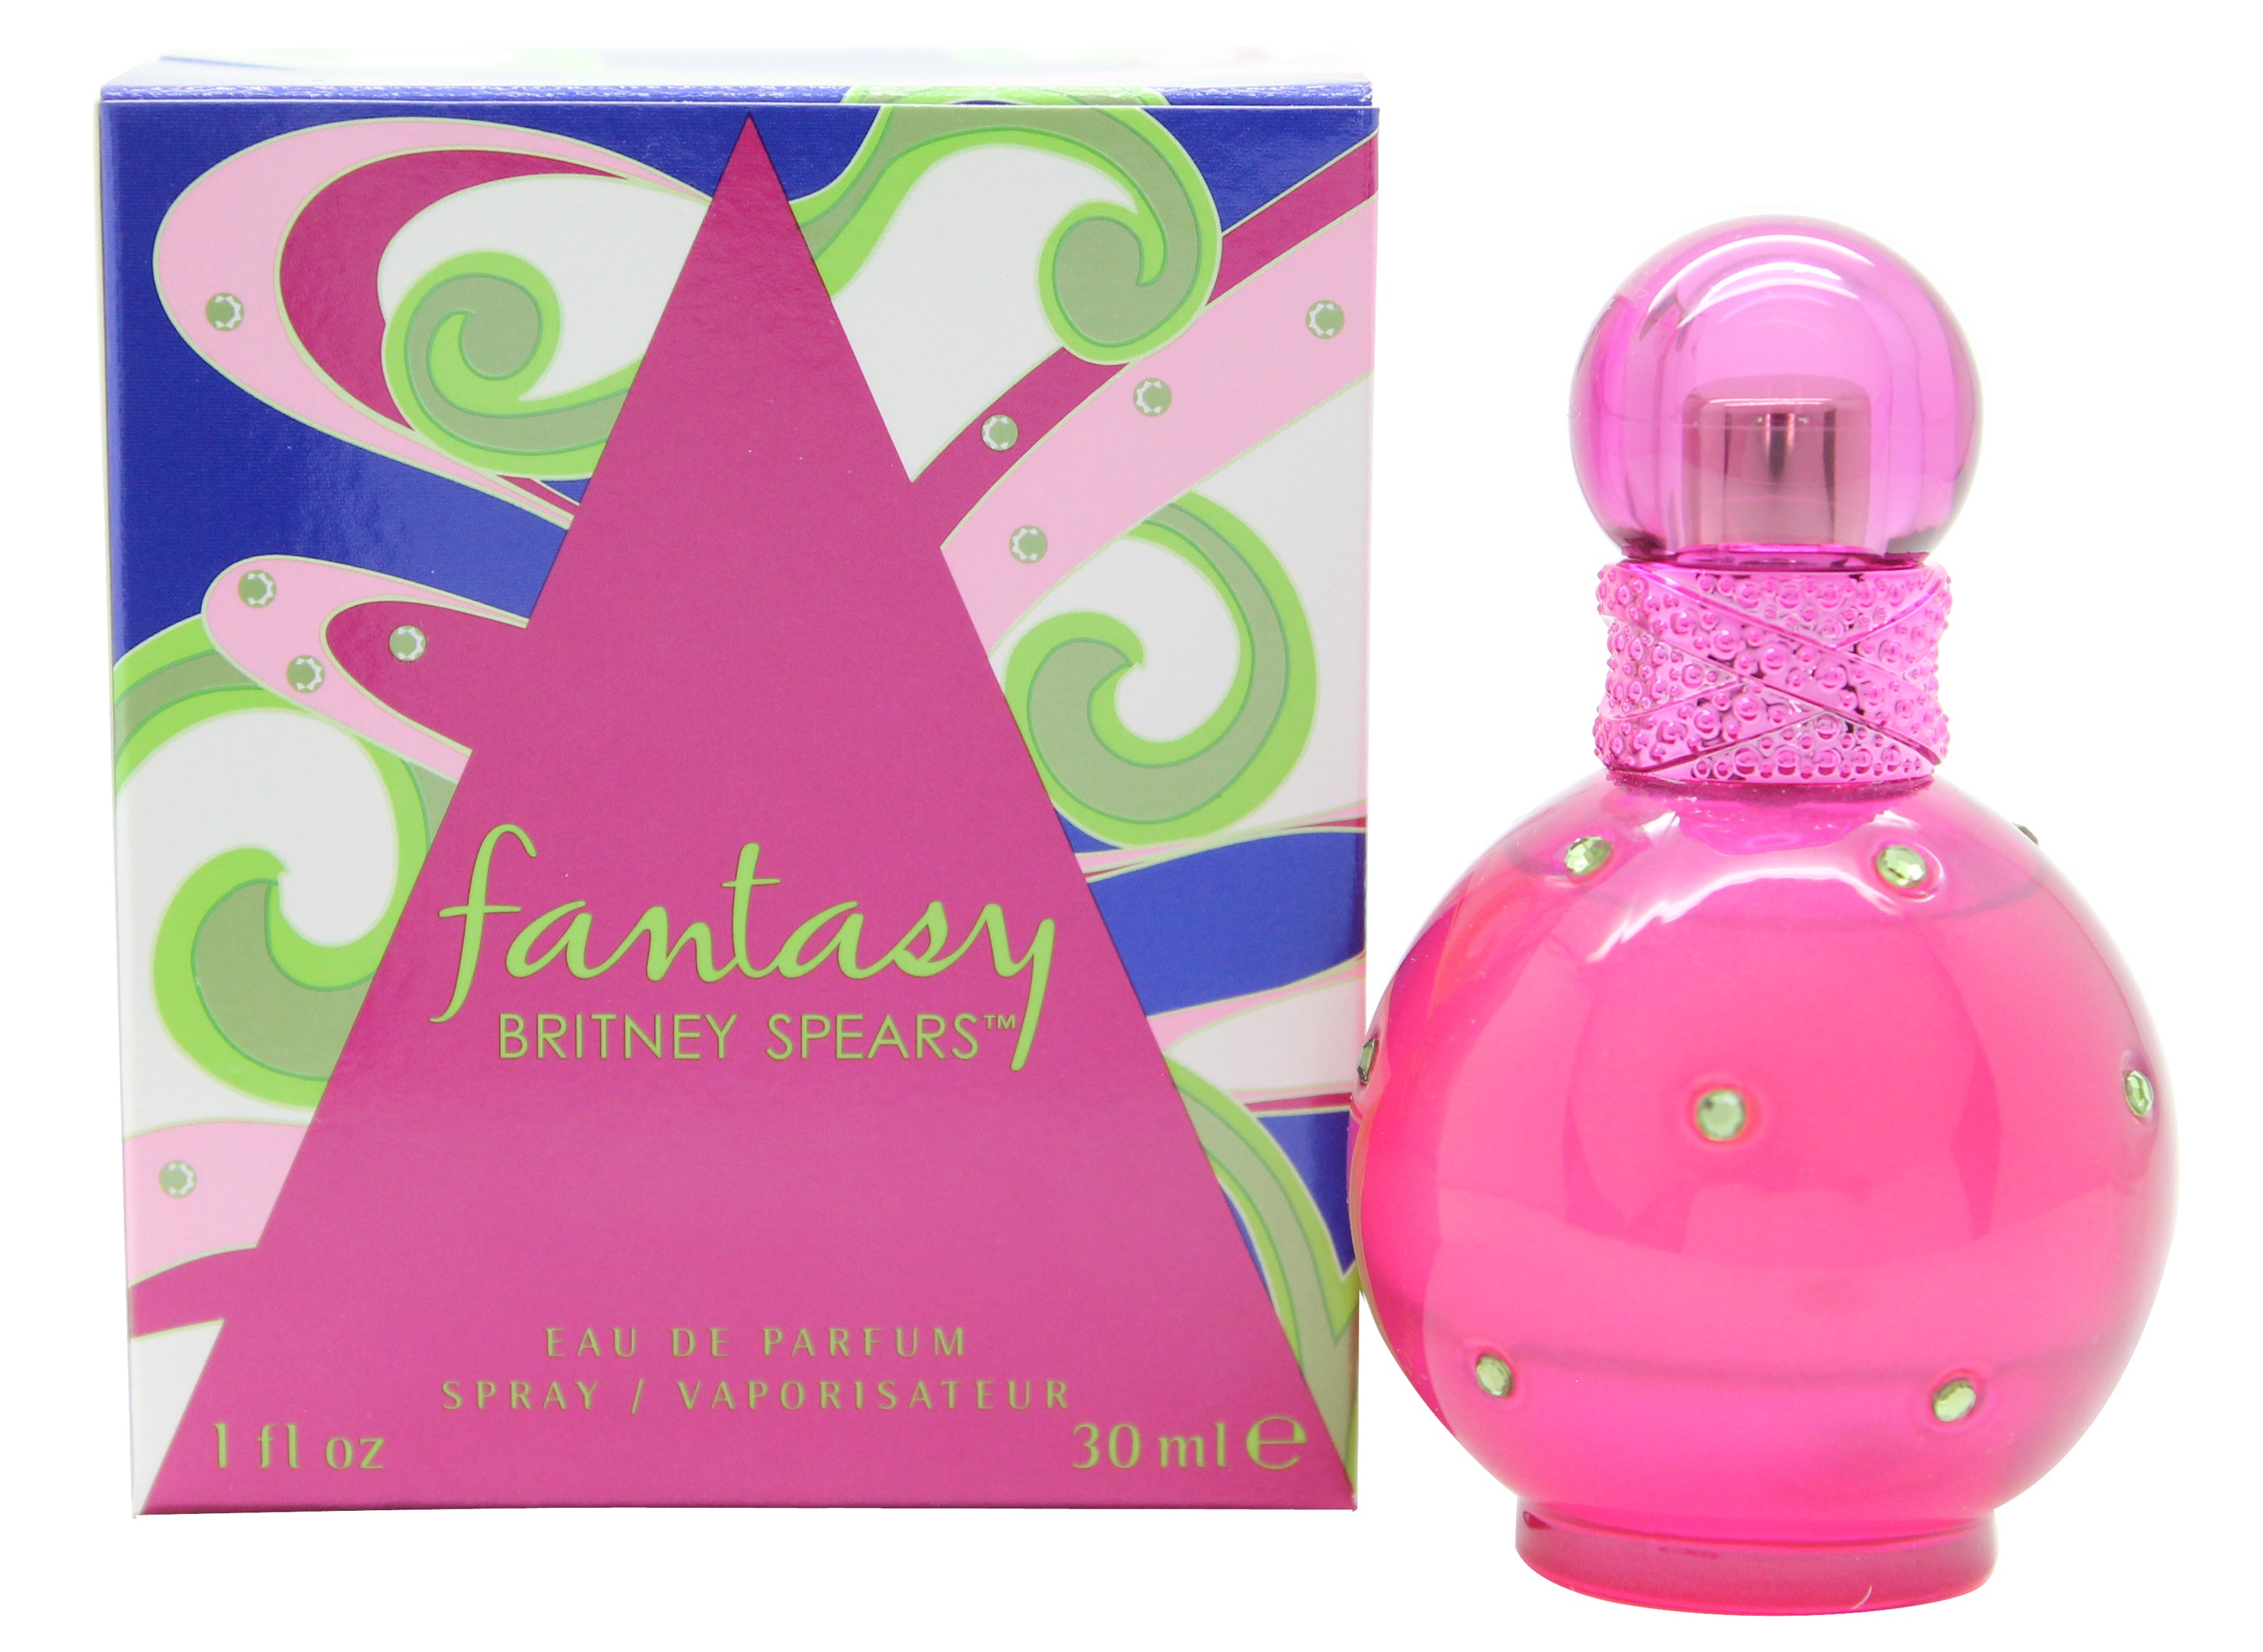 View Britney Spears Fantasy Eau de Parfum 30ml Spray information